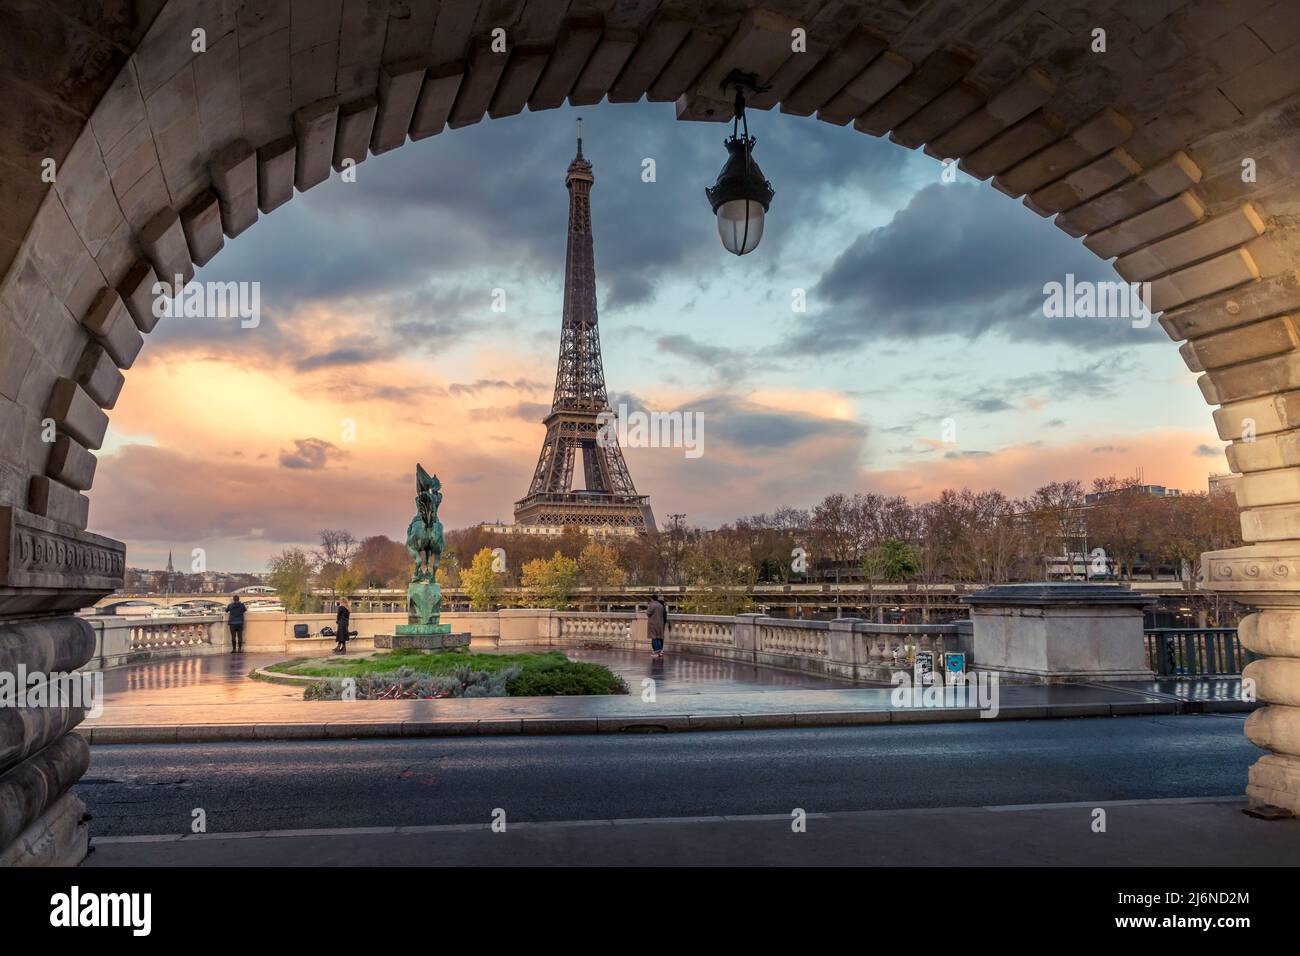 Paris, France - November 19, 2020: Eiffel tower seen from arch of Bir Hakeim bridge in Paris Stock Photo